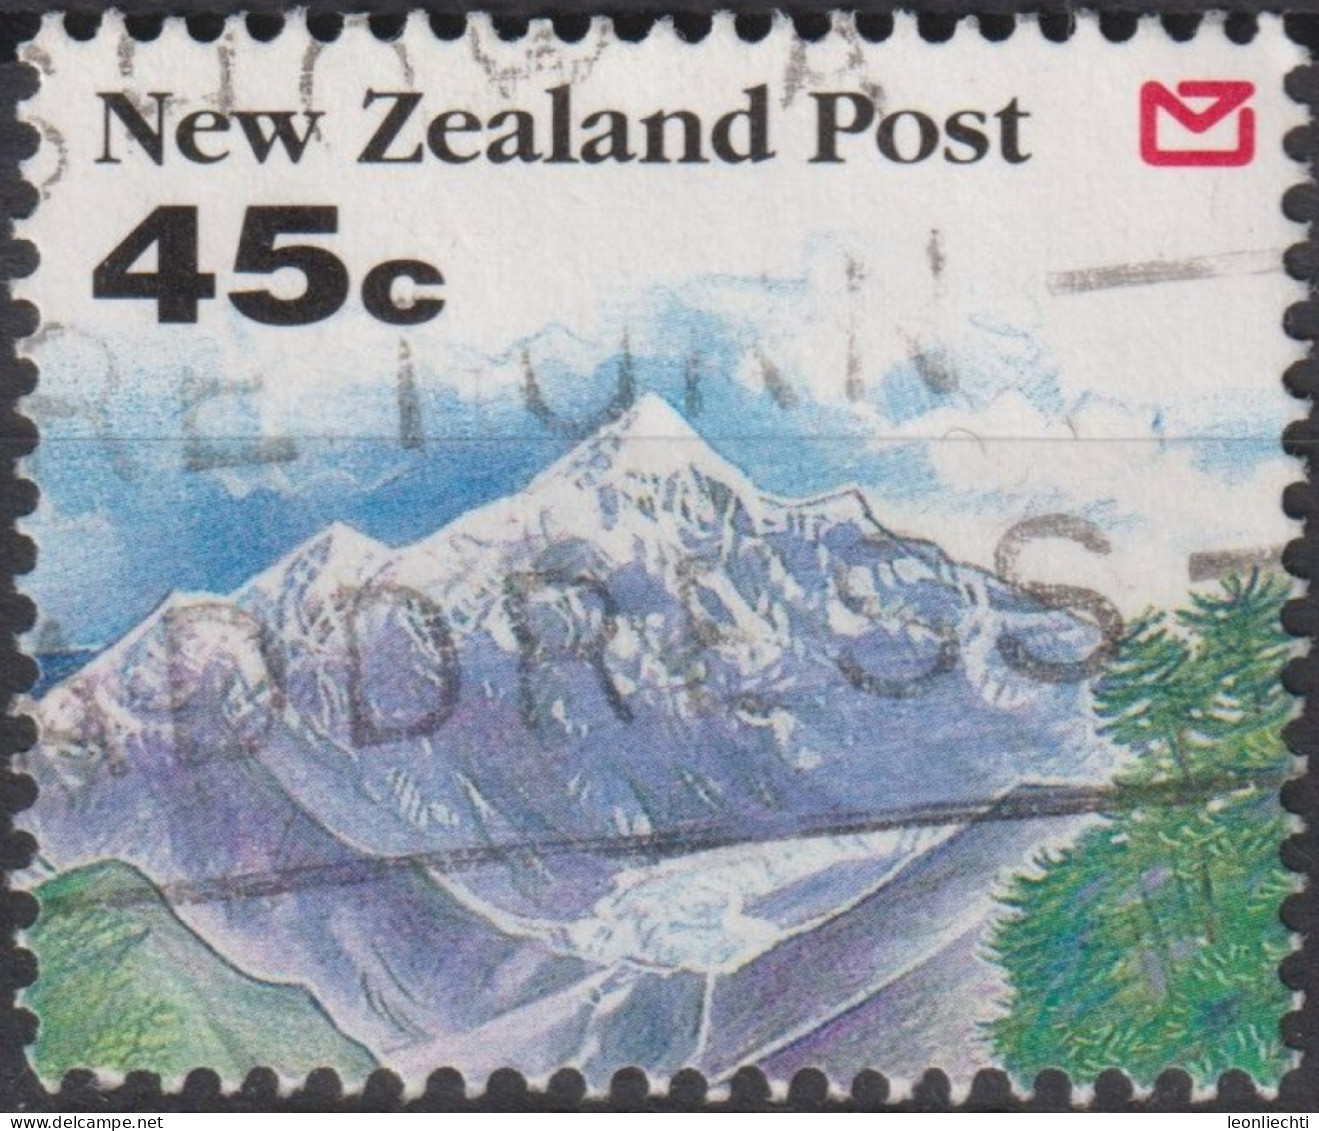 1992 Neuseeland ° Mi:NZ 1247A, Sn:NZ 1119, Yt:NZ 1191, Glacier Ice, Scenery 1992 - Landscapes - Gebruikt